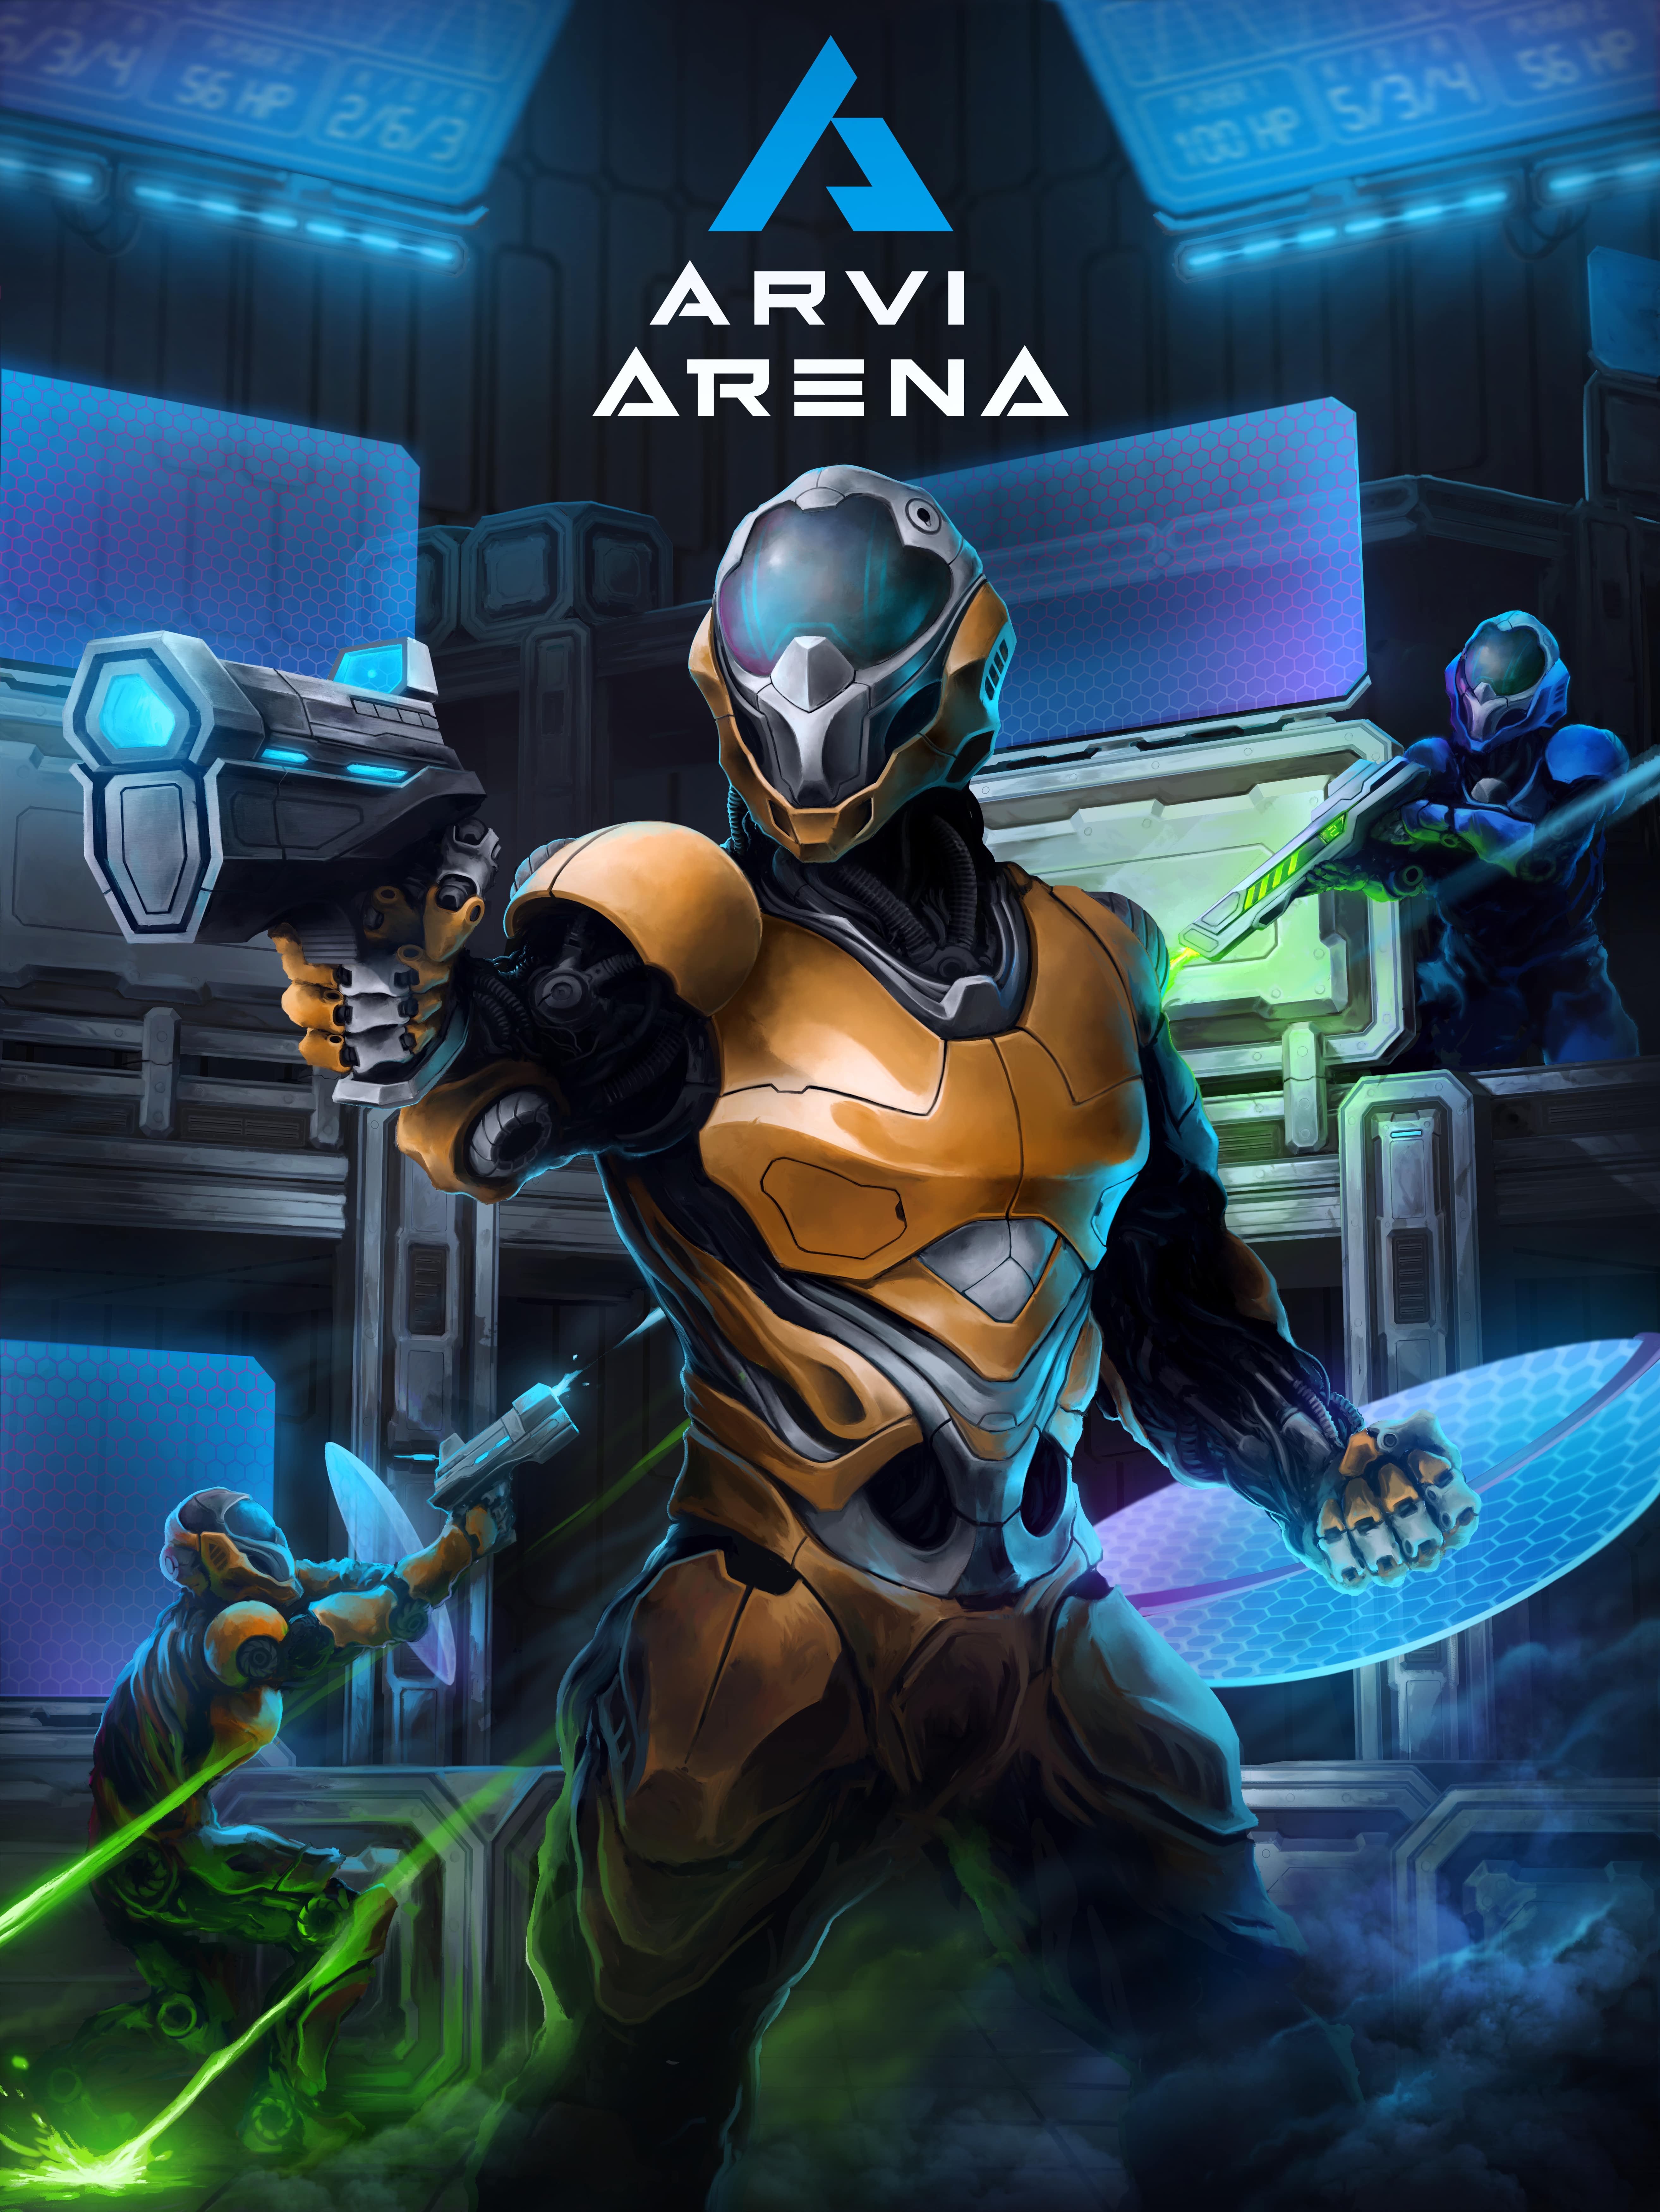 Arena ARVI VR shooter